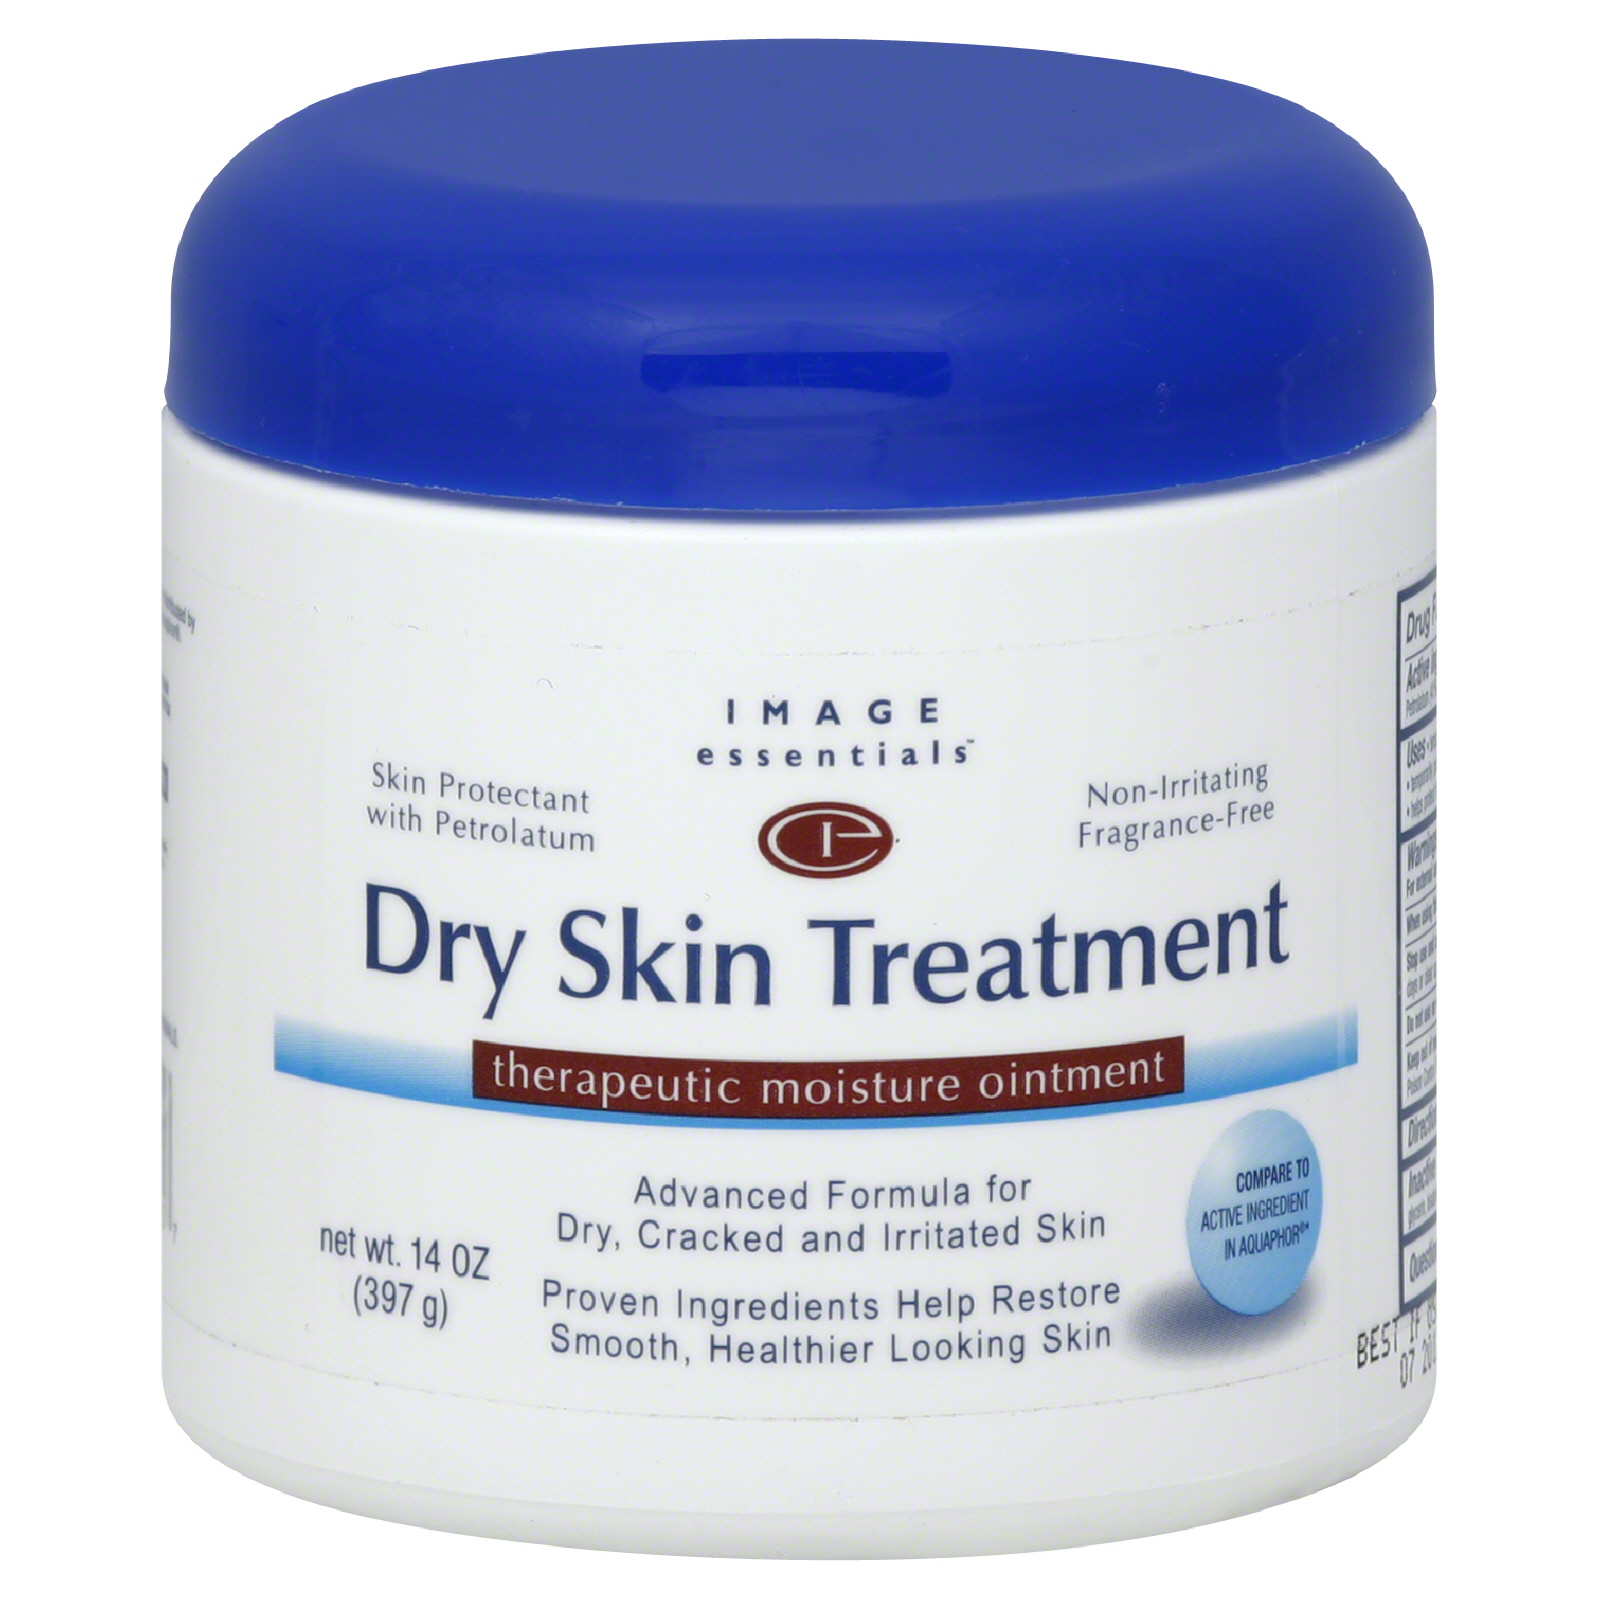 Image Essentials Dry Skin Treatment 14 oz (397 g)